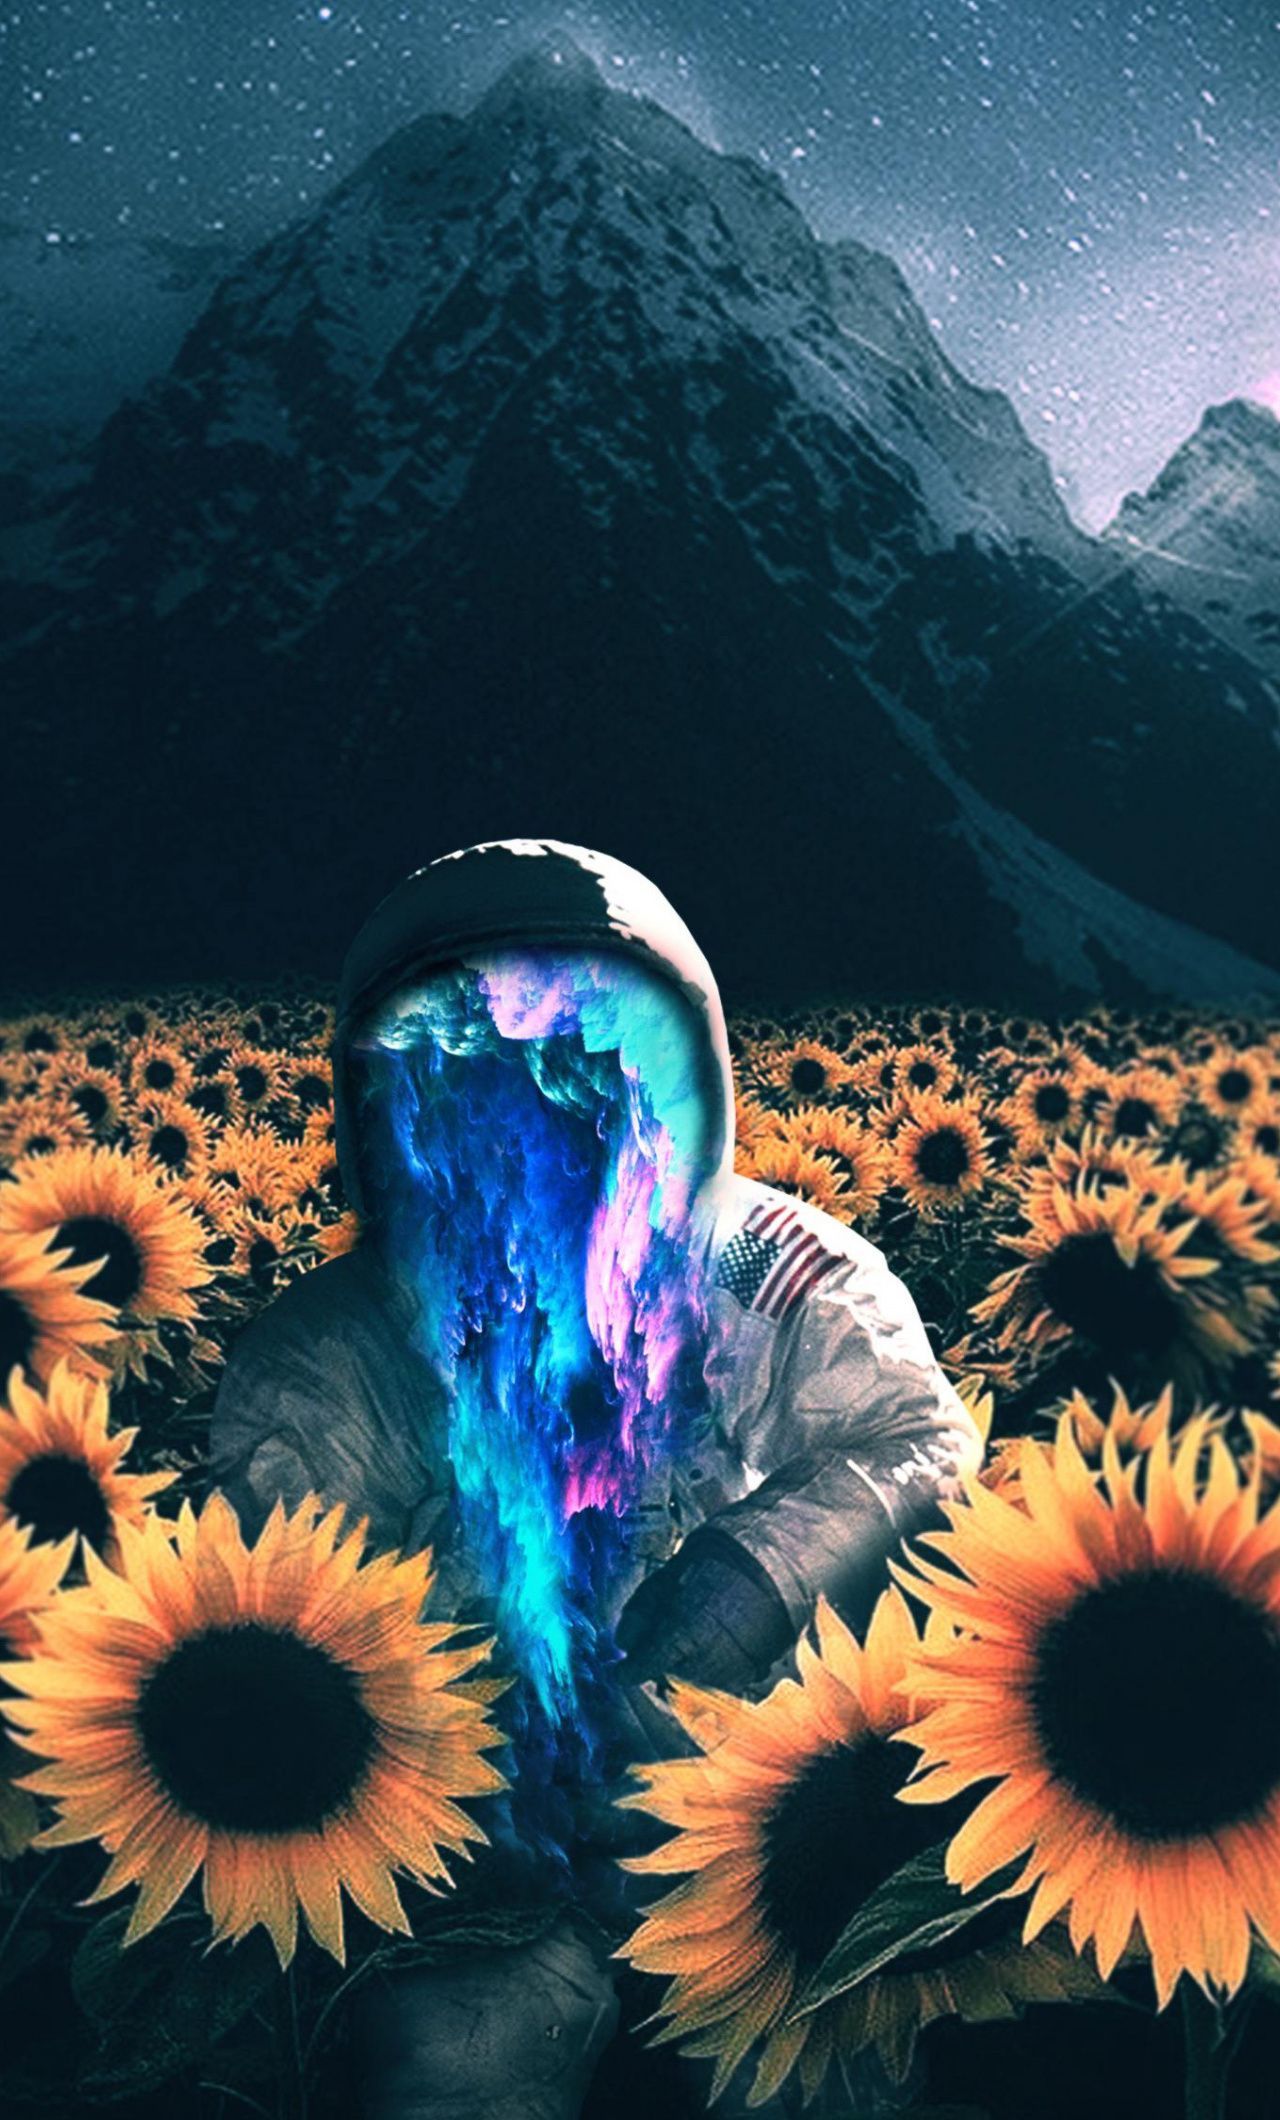 Astronaut, sunflower farm, mountains, surreal, 1280x2120 wallpaper